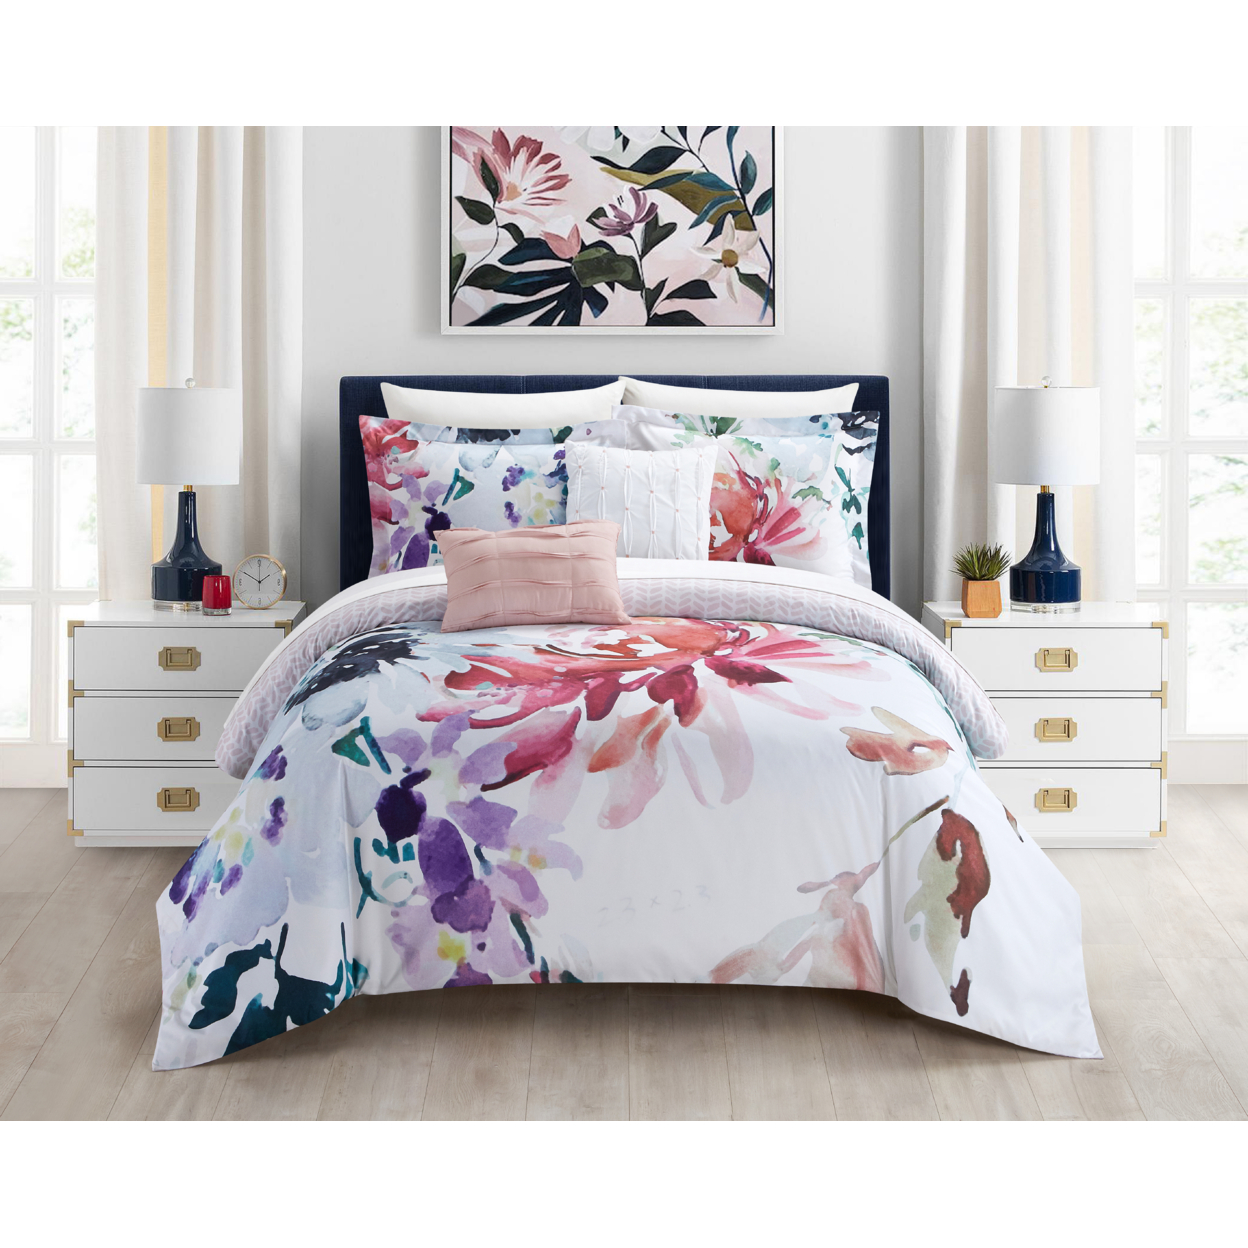 Victoria 5 Piece Reversible Comforter Set Floral Watercolor Design Bedding - Victoria Purple, King